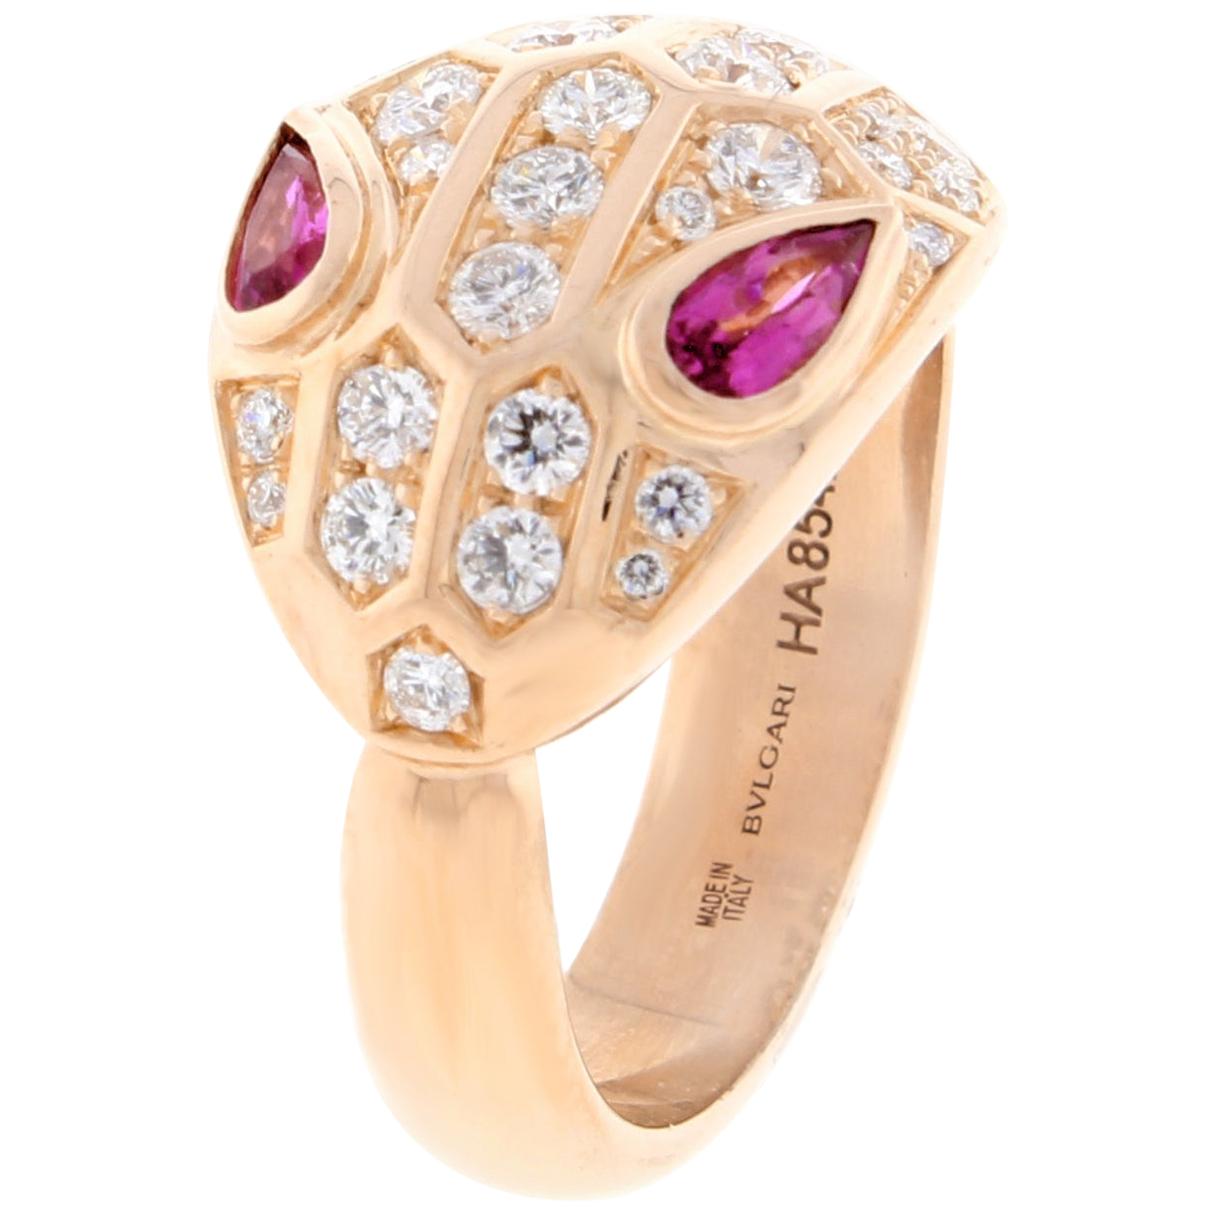 Bulgari Serpenti Rose Gold Full Diamond and Rubellite Ring